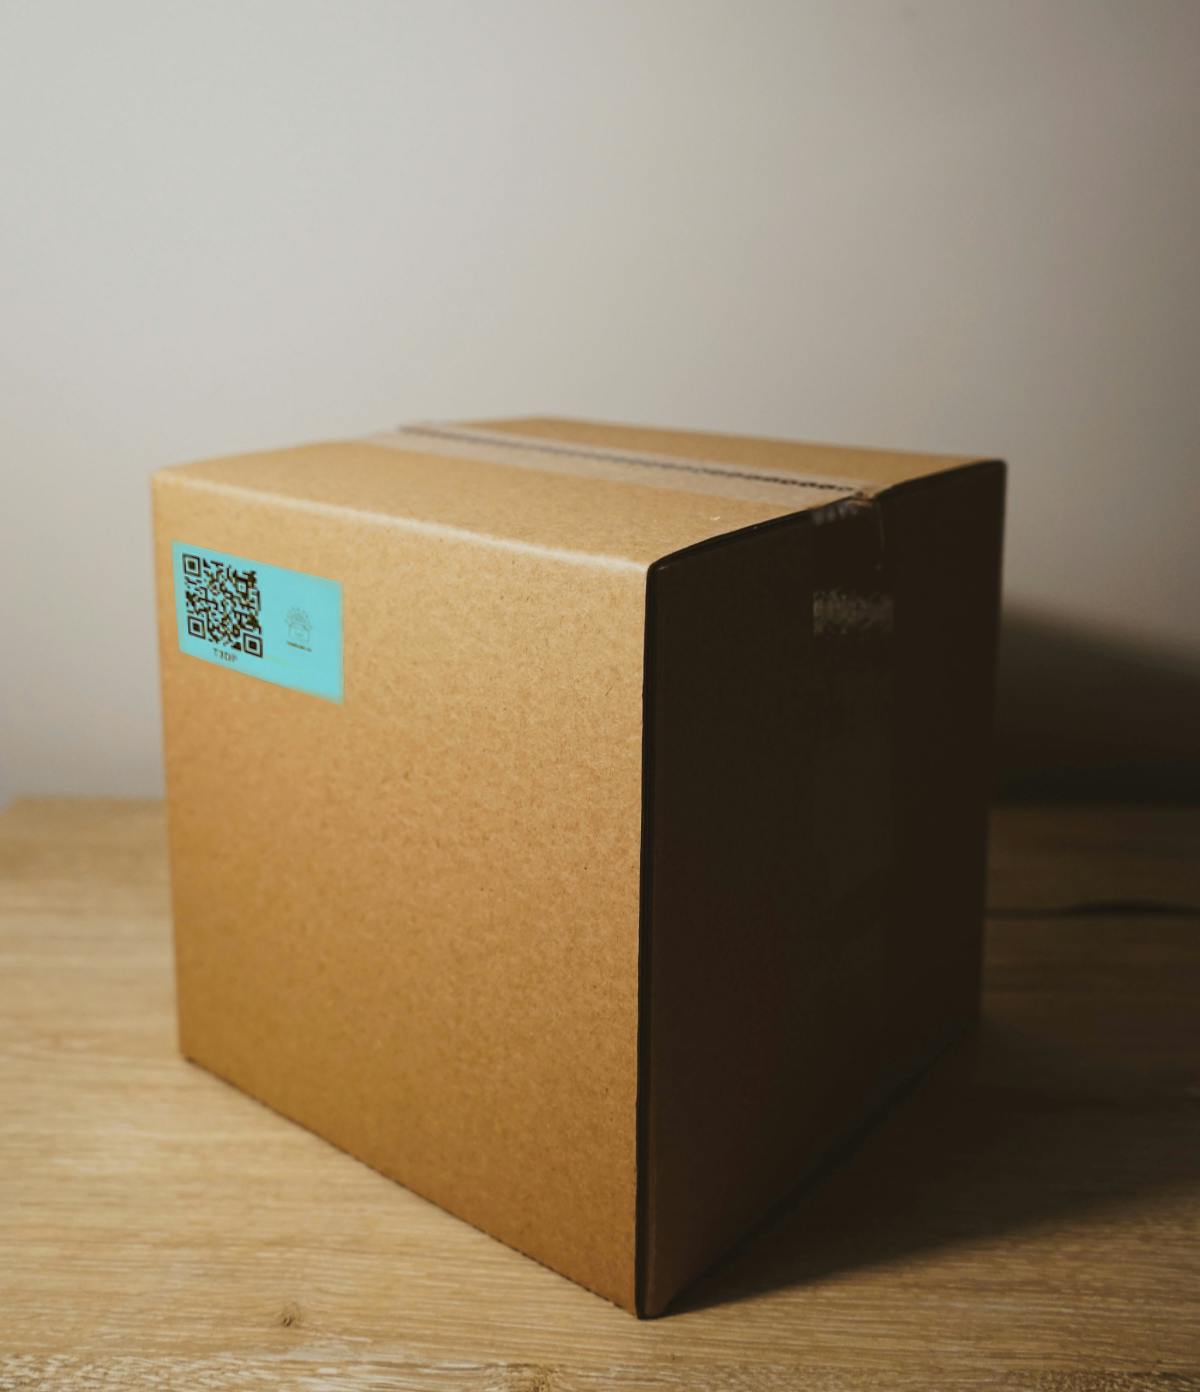 Carton box with boxbrain qr code label on it